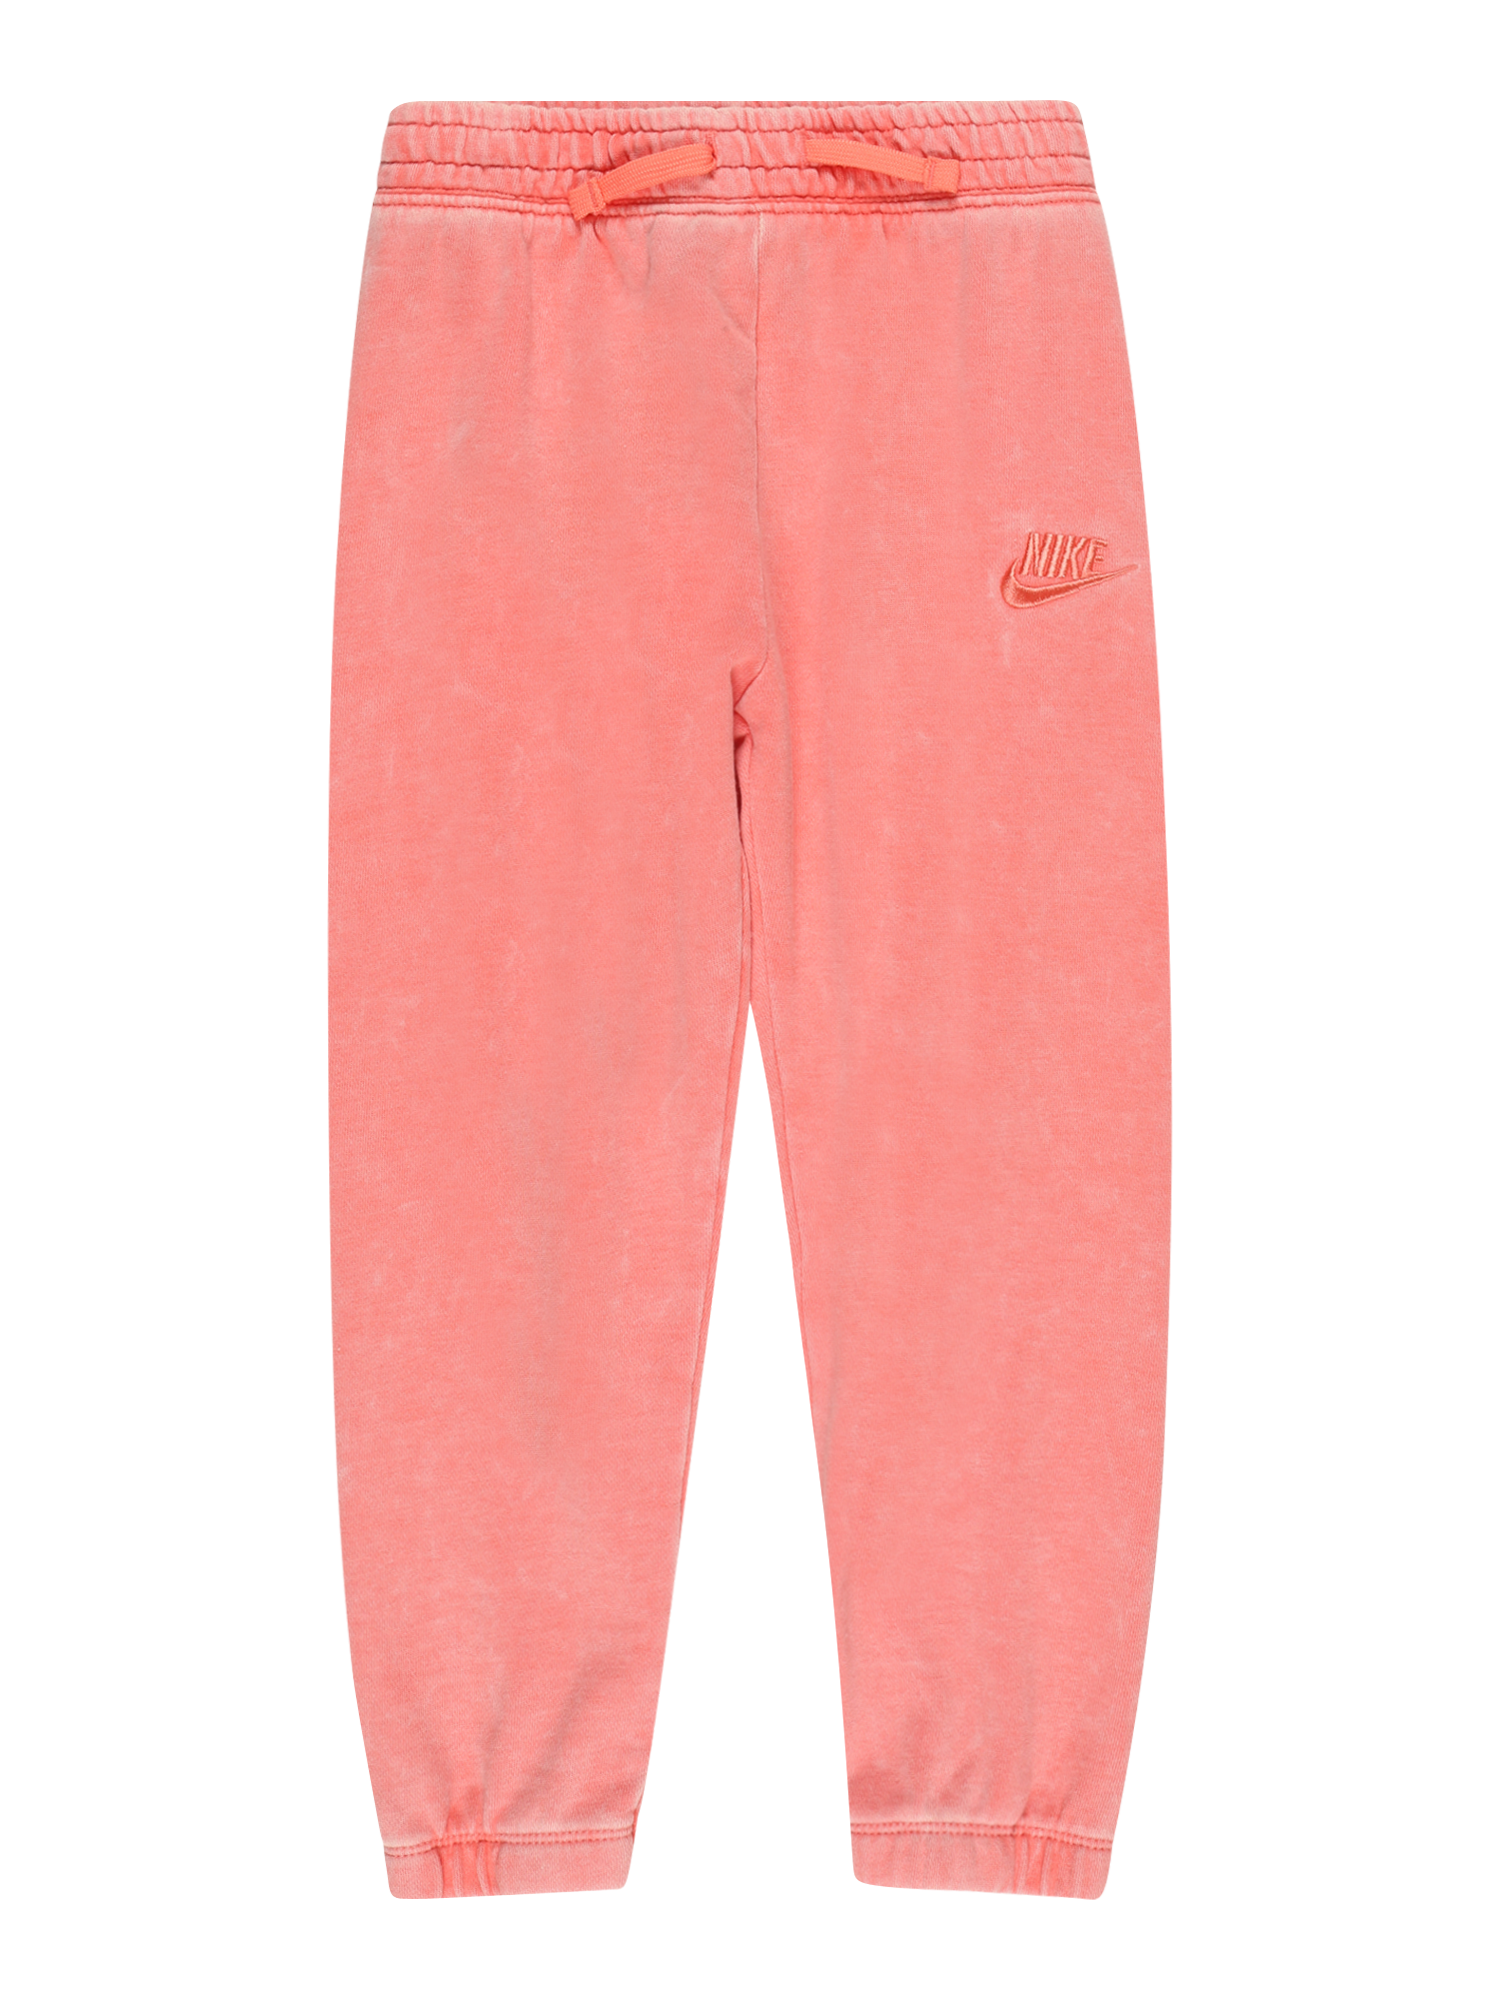 Bambina (taglie 92-140) Bambini Nike Sportswear Pantaloni in Rosa Antico 